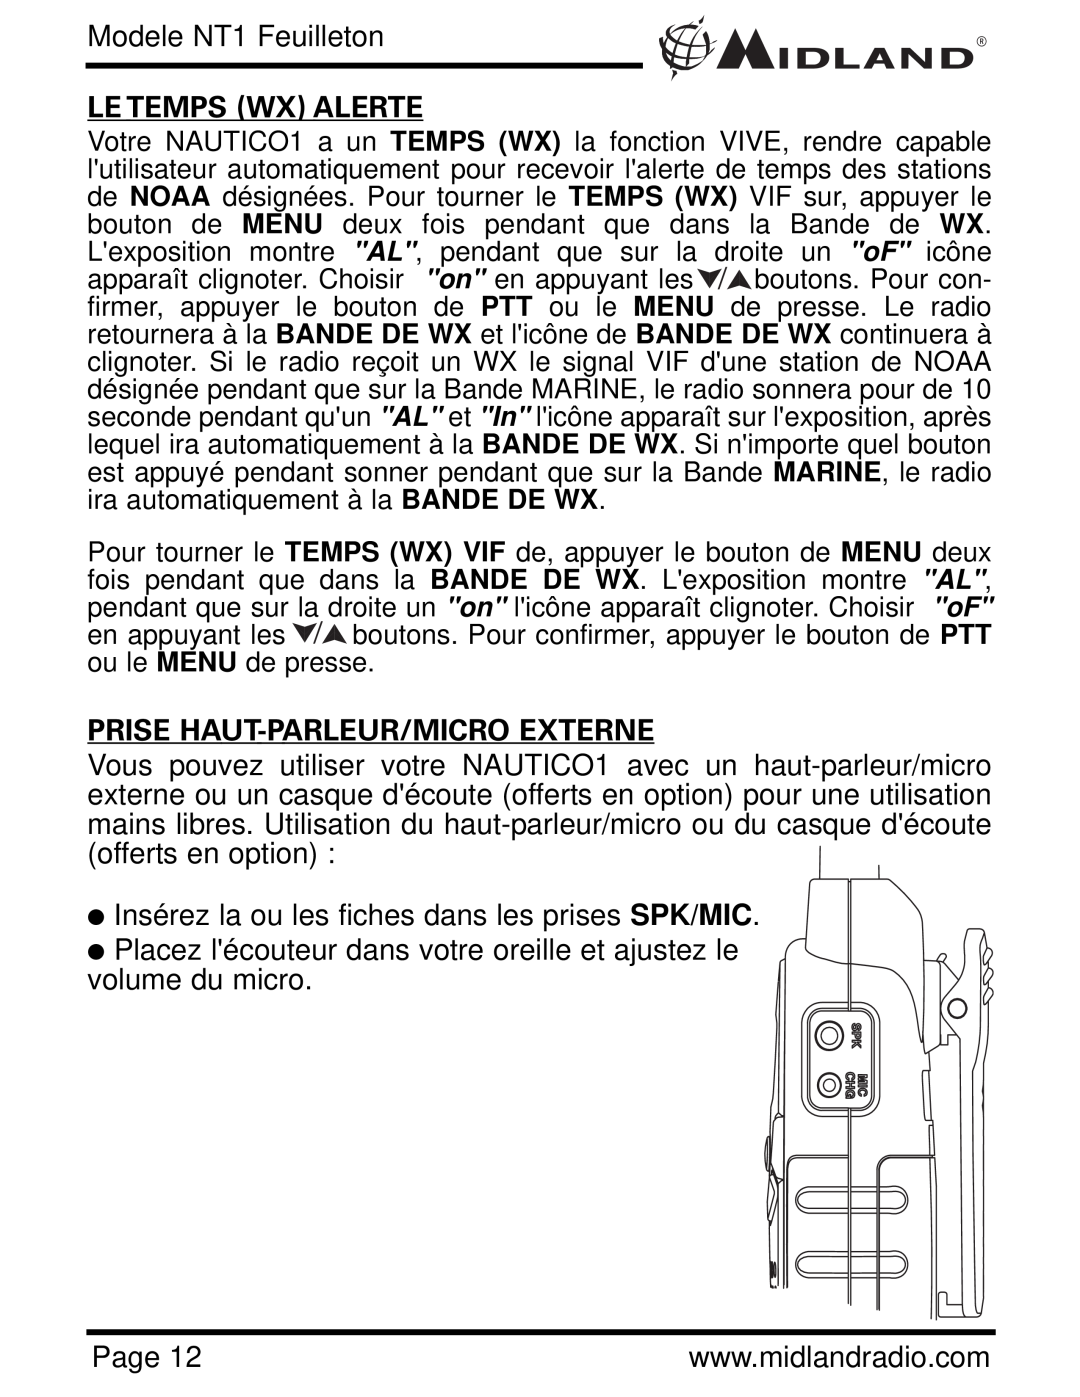 Midland Radio NT1VP, NT1 SERIES owner manual Le Temps Wx Alerte, Prise Haut-Parleur/Micro Externe, Modele NT1 Feuilleton 